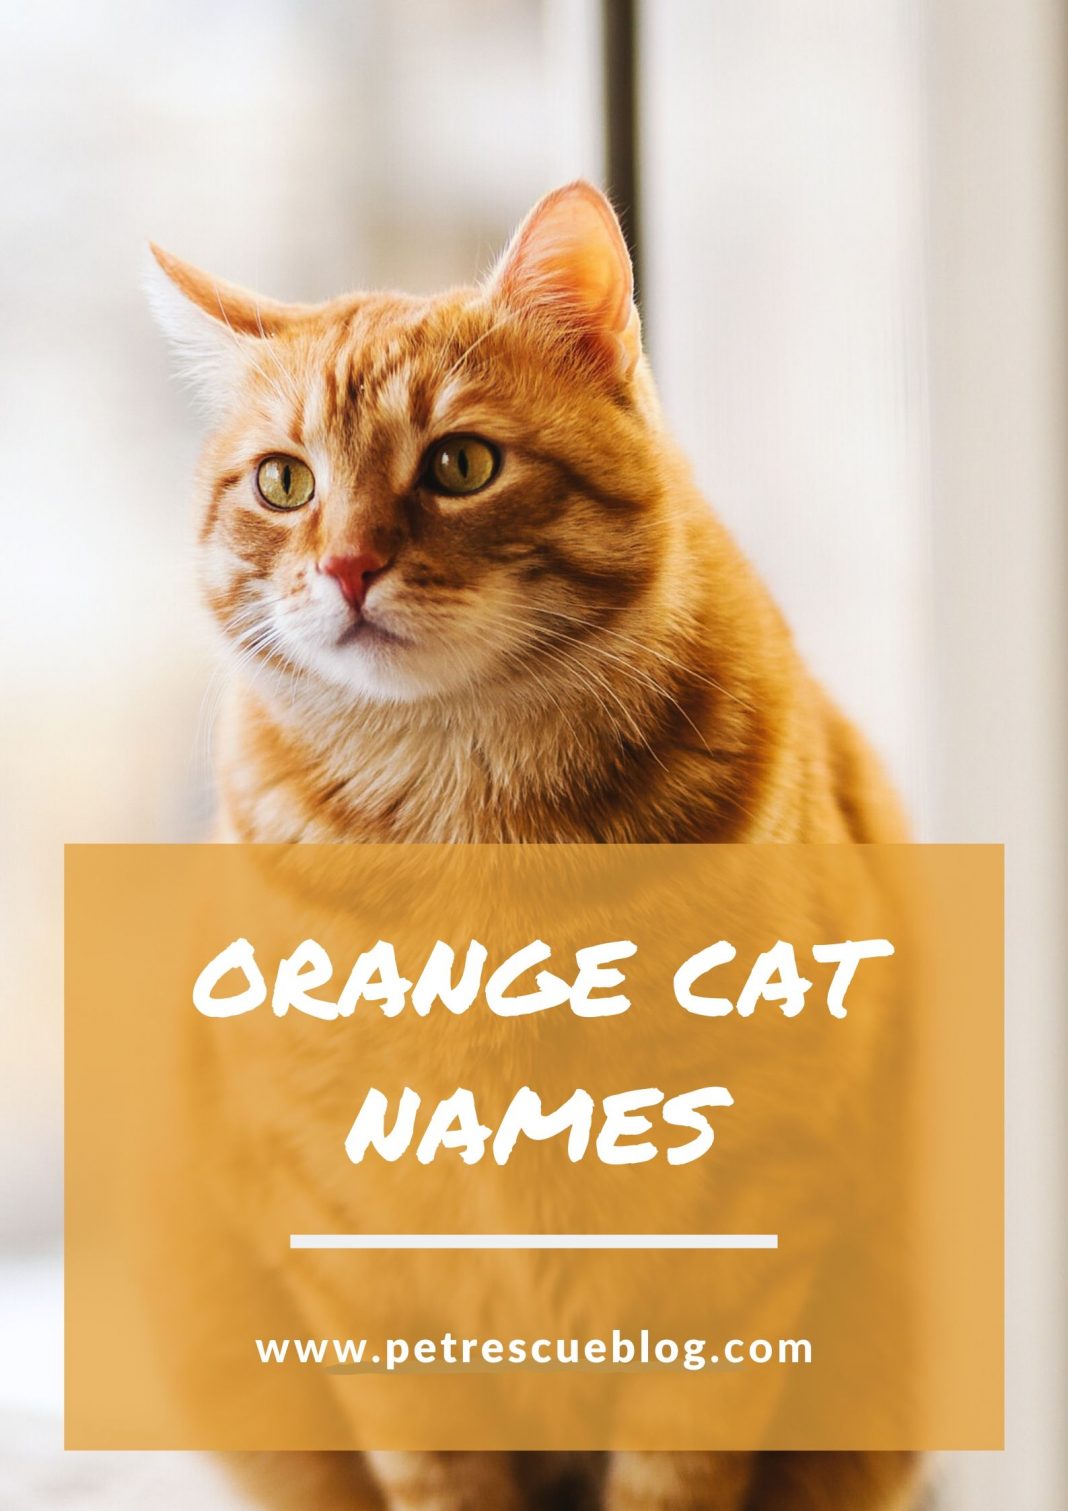 Boy Cat Names 400+ Cute Kitten Name Pet Rescue Blog